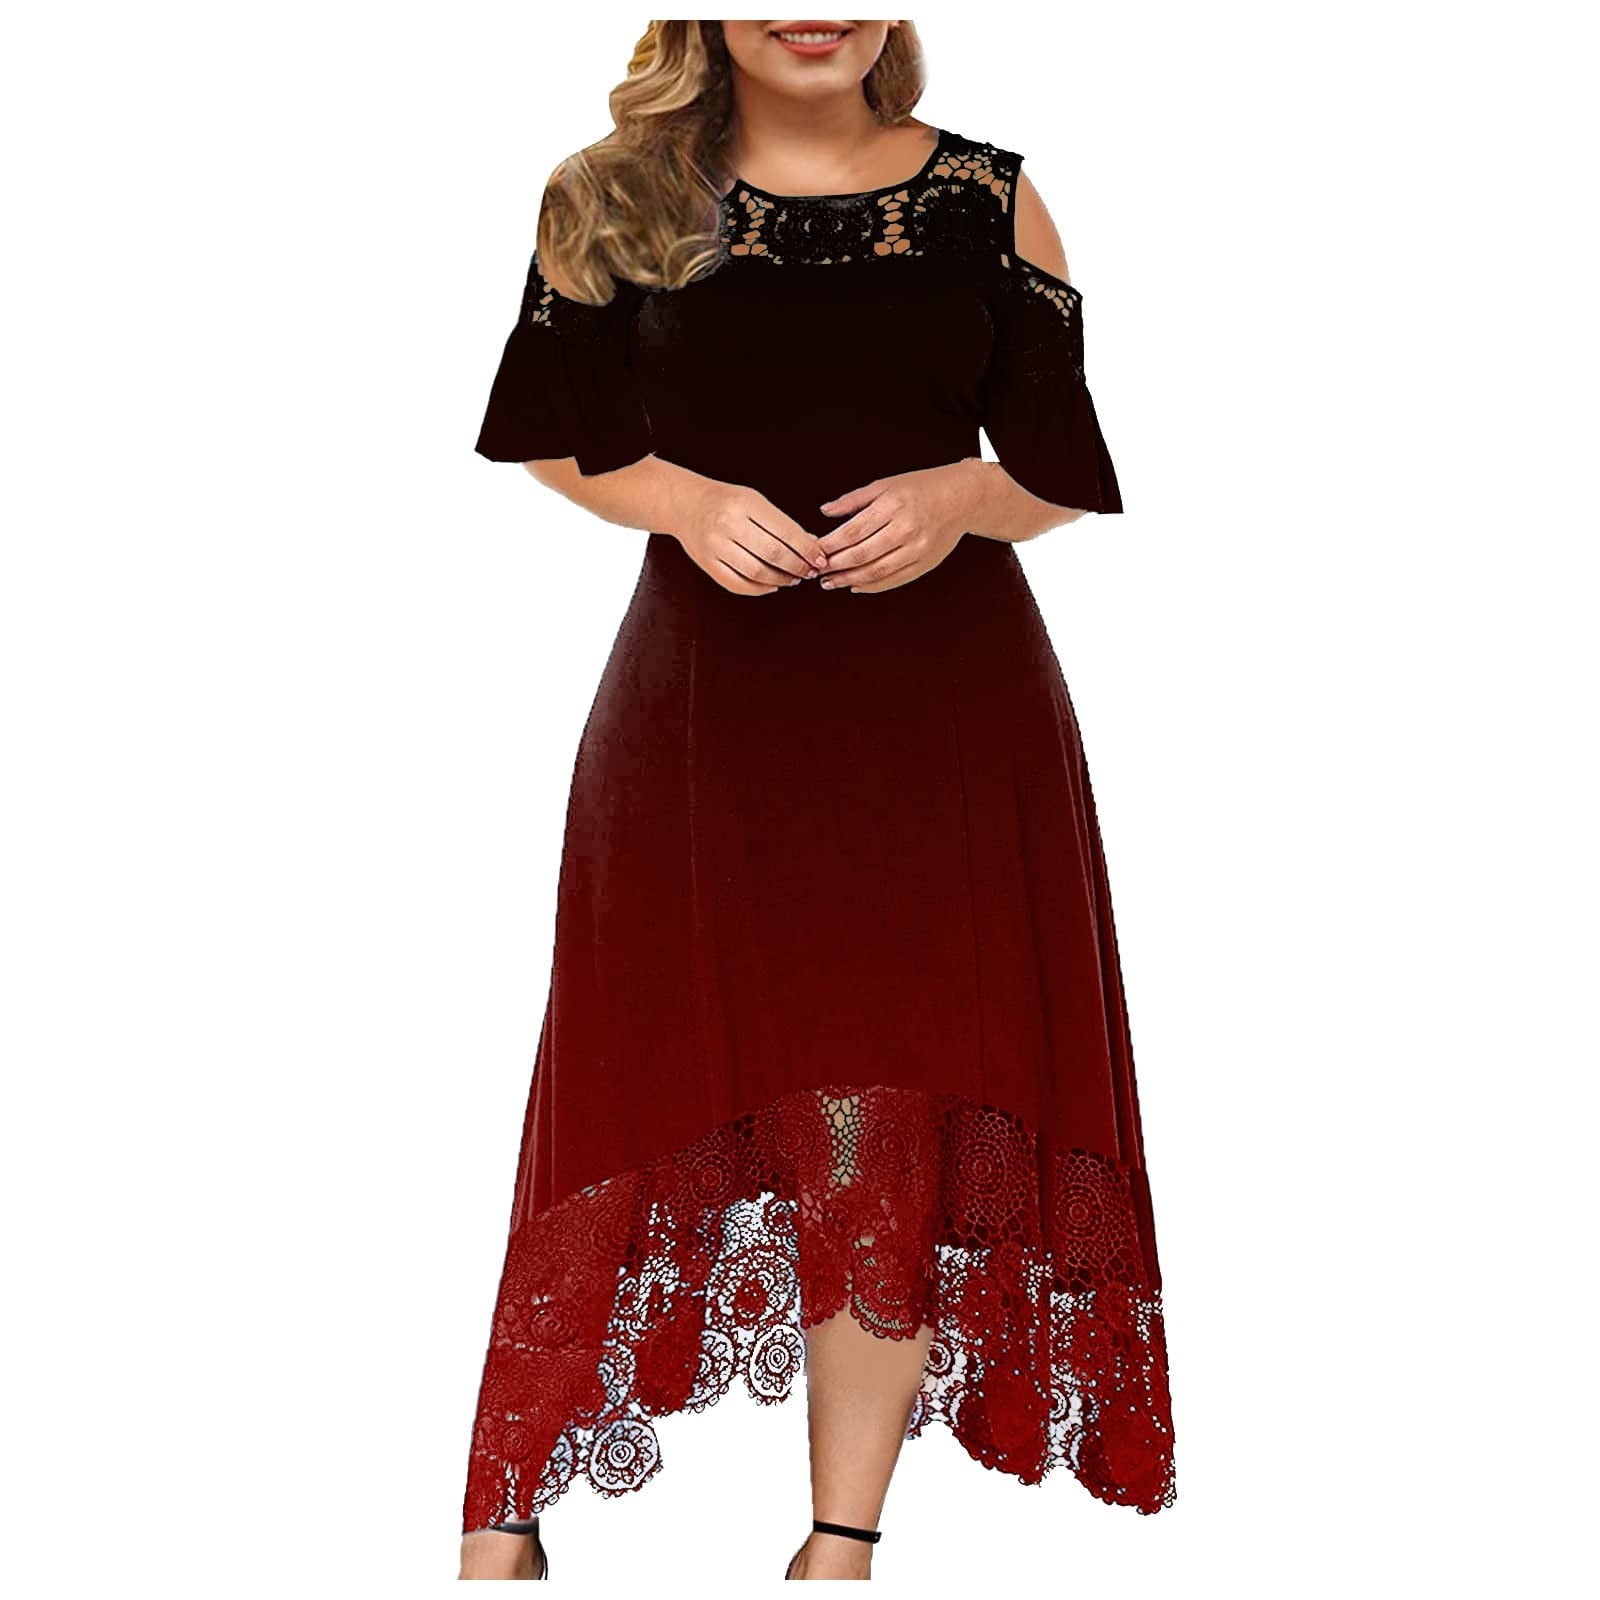 ZVAVZ vestidos cortos elegantes para mujer, Semi Formal Dresses for Women,  Women's Fashion Floral Lace Ruffle Style Bridesmaid Party Maxi Dress  Sundress red sparkly dress 